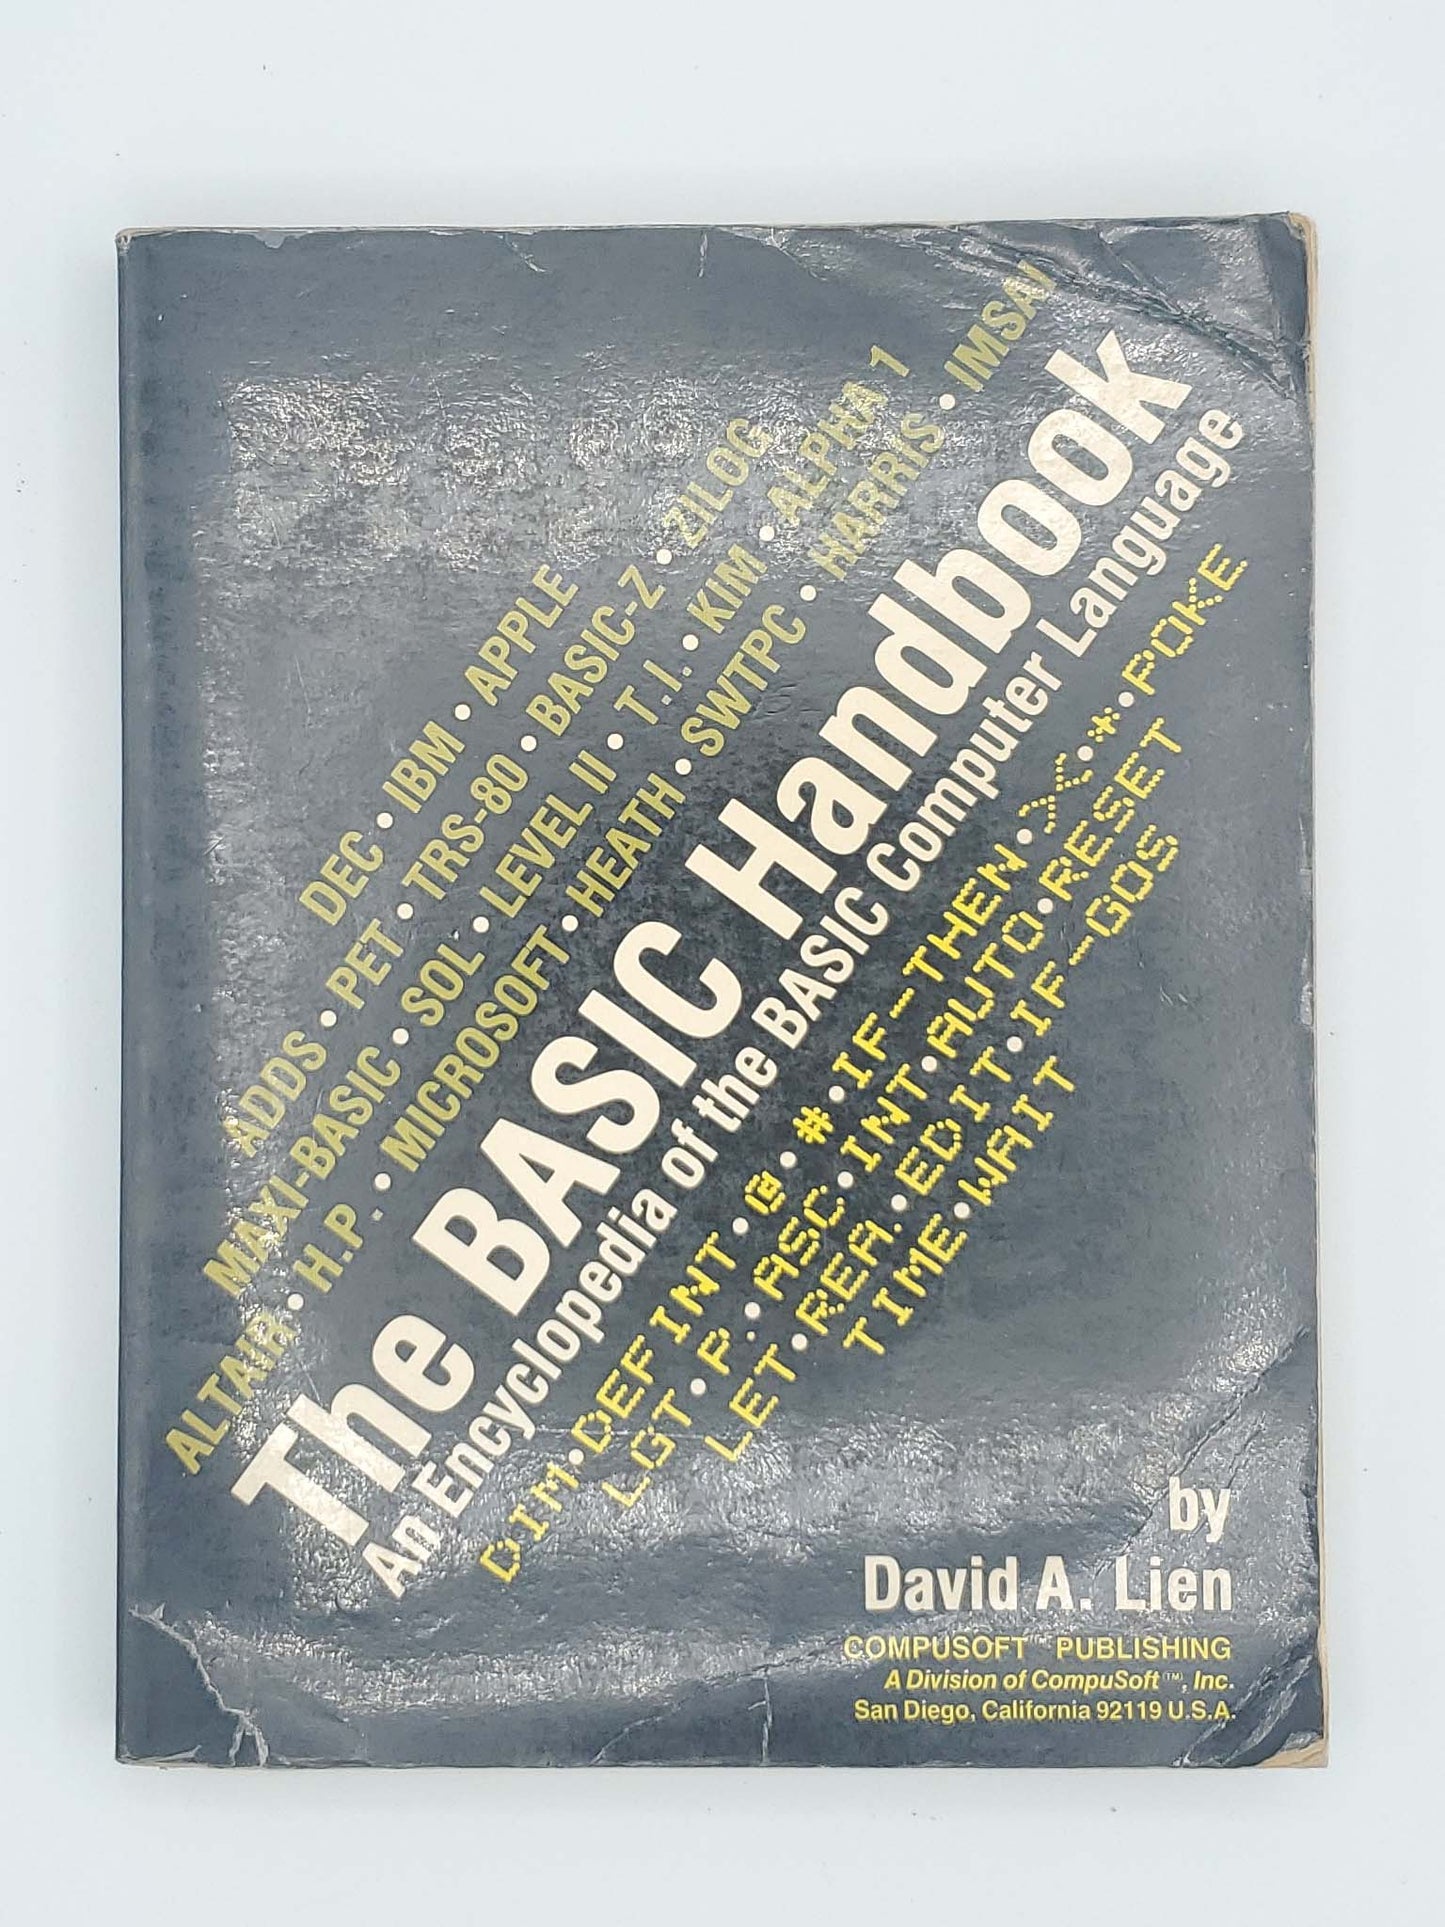 The BASIC Handbook 1979 Edition - Encyclopedia of the BASIC Computer Language